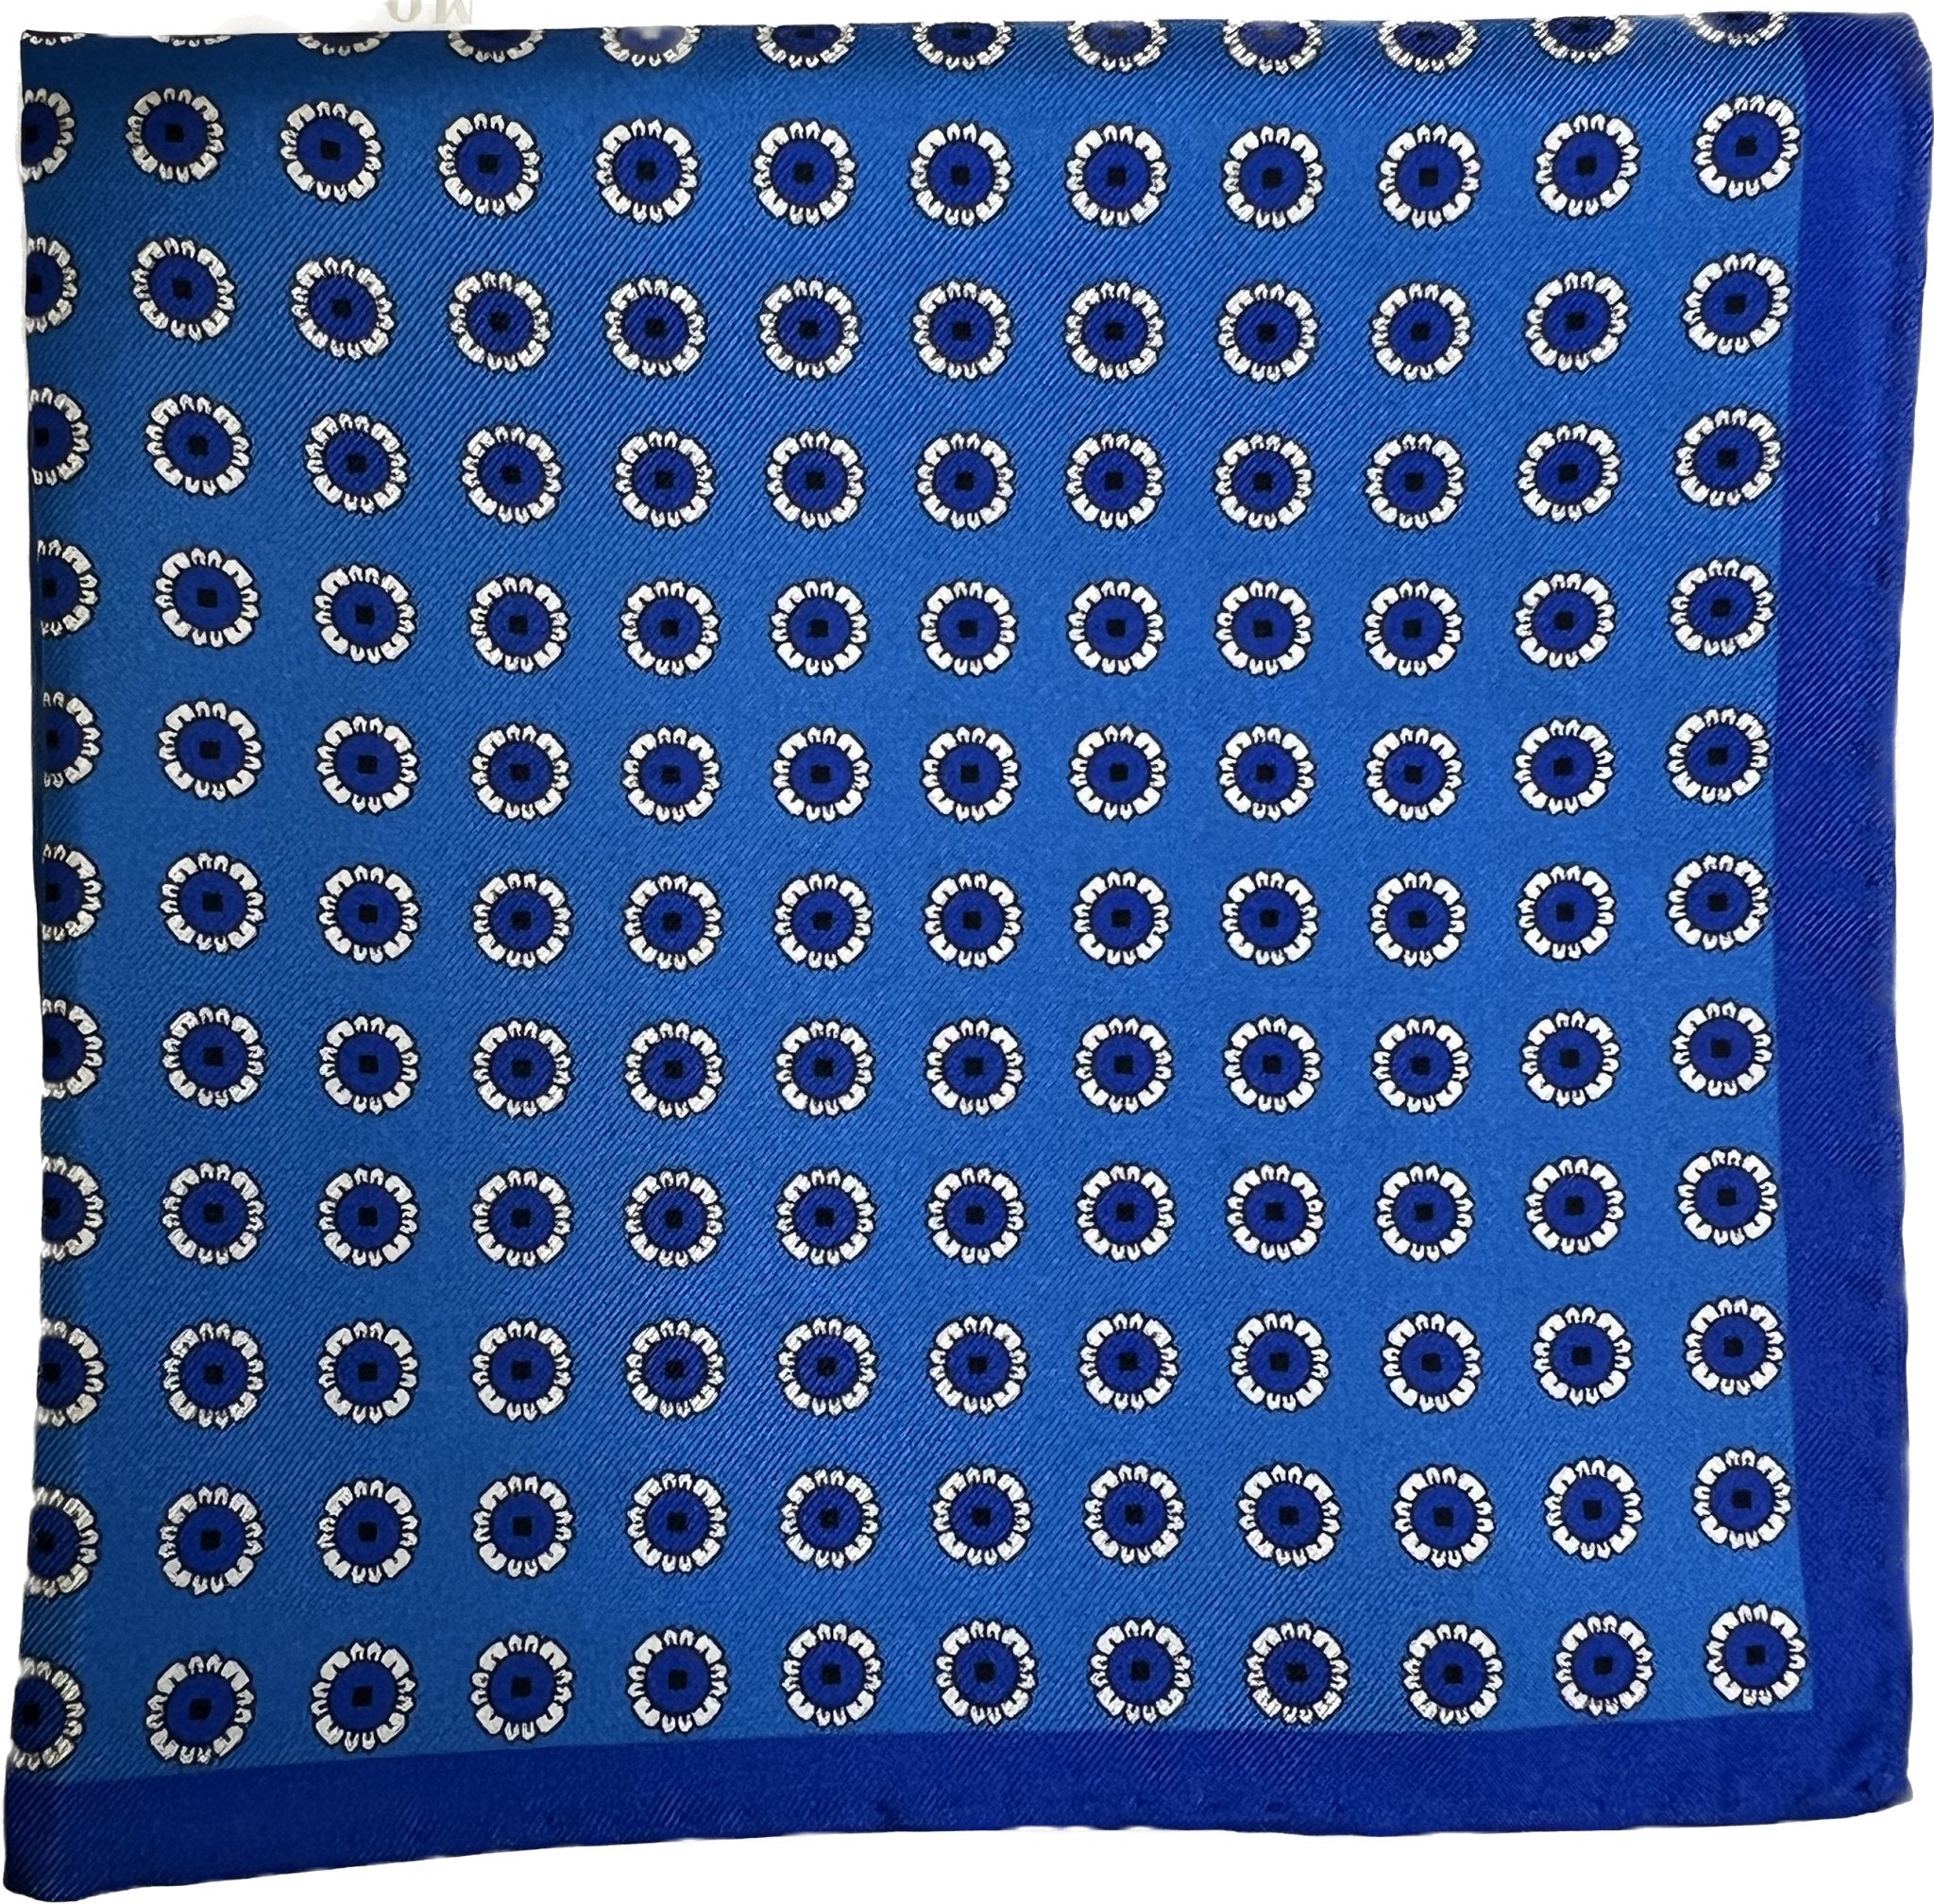 Pocket square seta micro fiore royal blue Monsieur - MONSIEUR